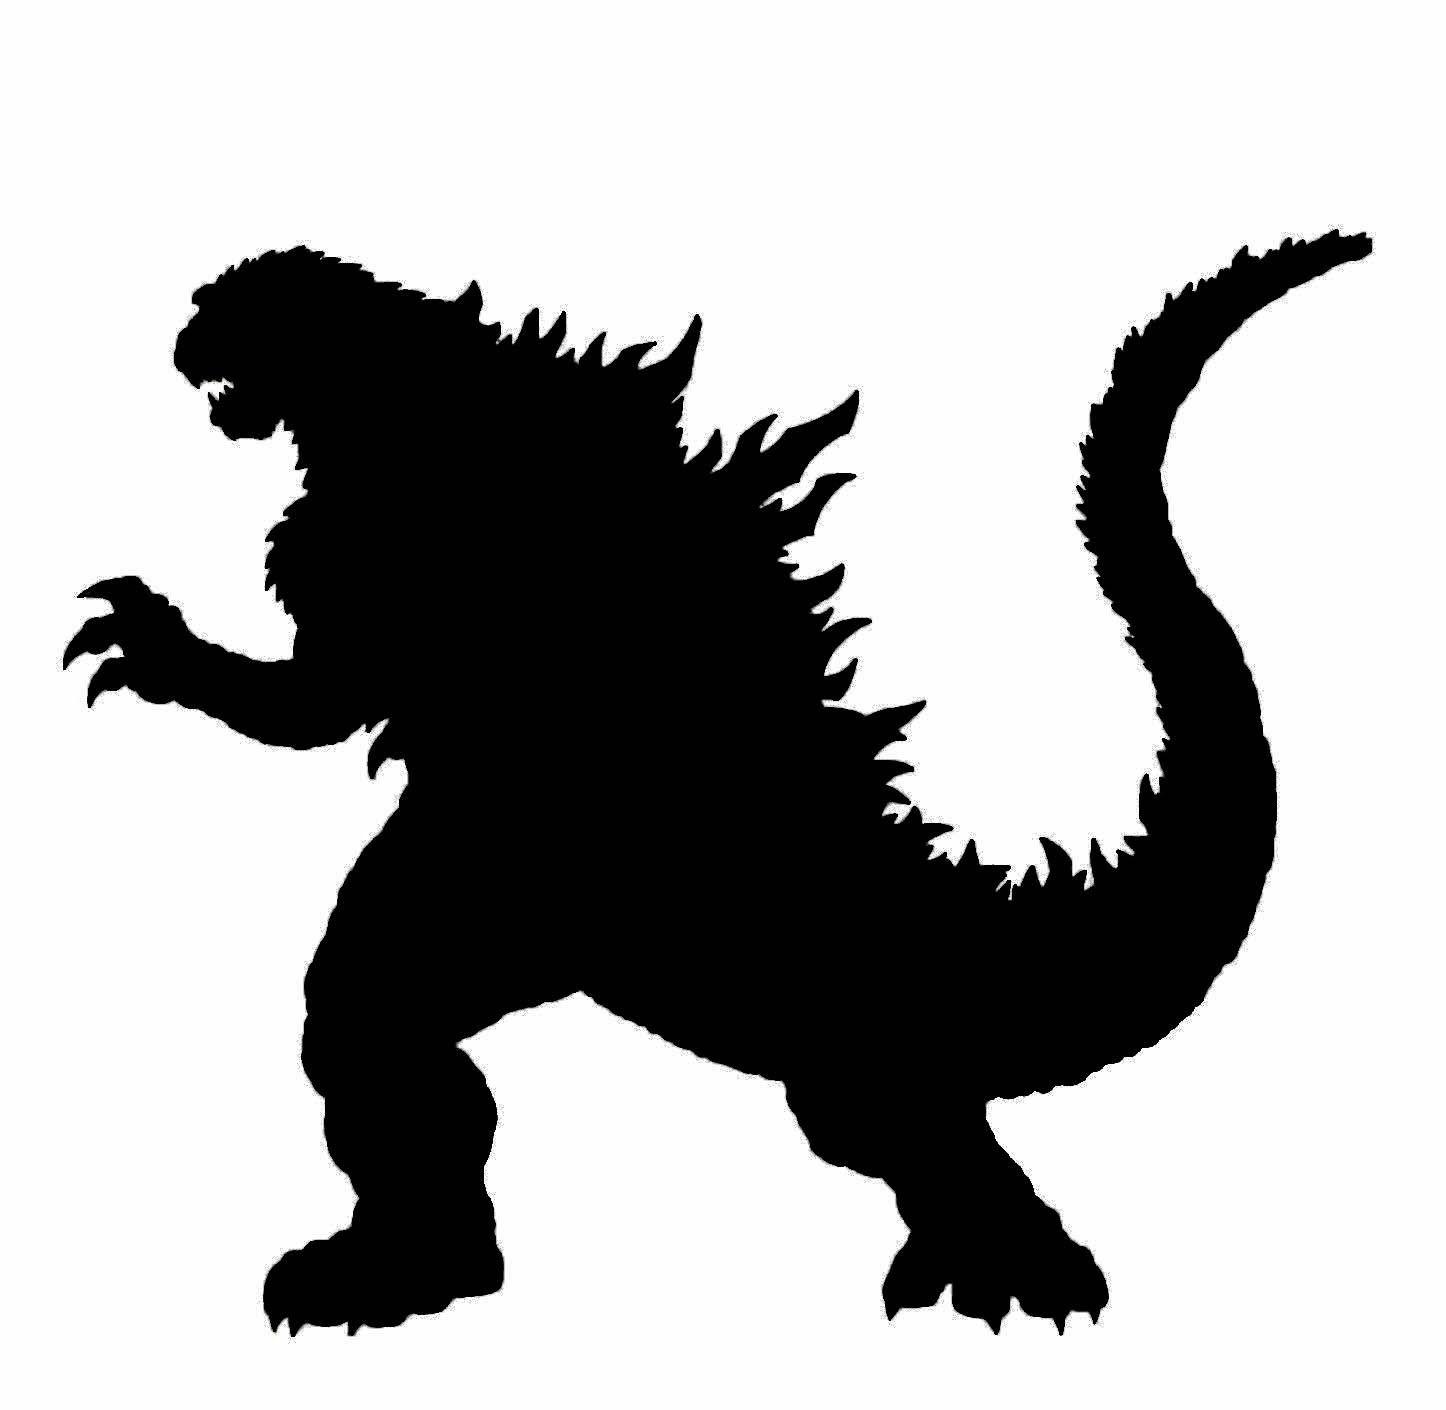 Godzilla Black and White Logo - Godzilla 2000 Silhouette 4 Tall Decal Sticker for Cars